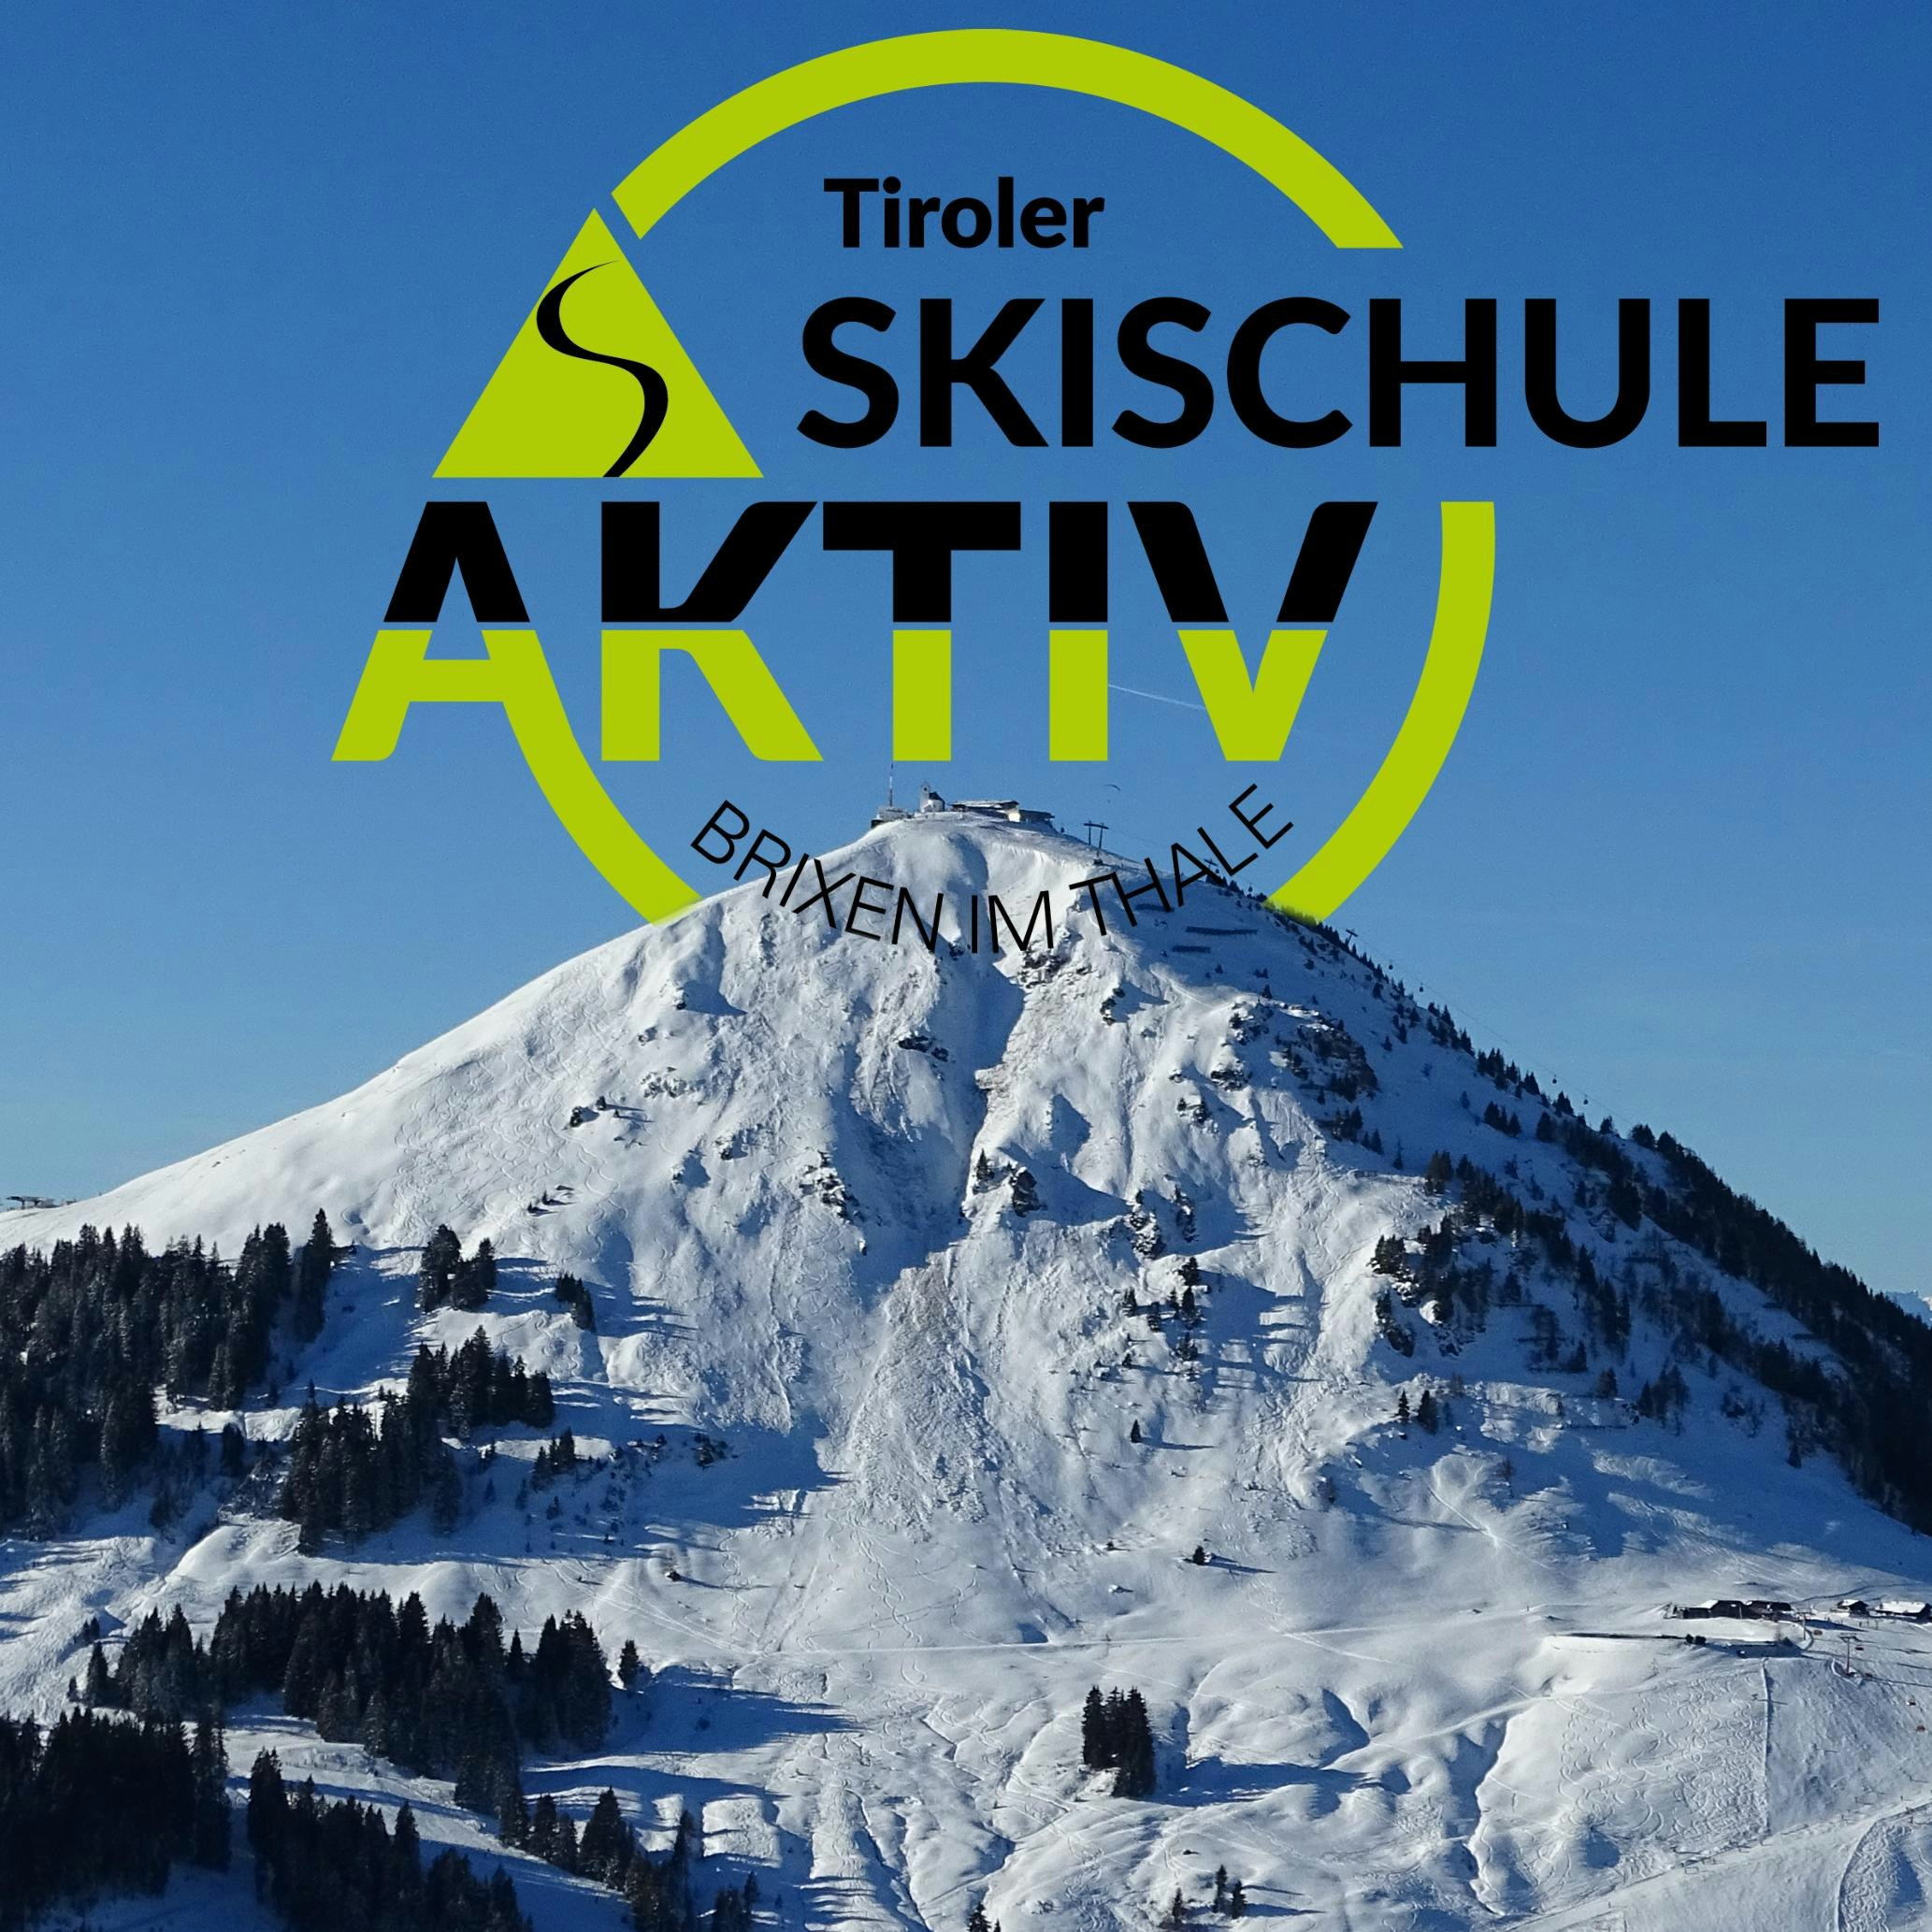 Tiroler Skischule Aktiv Brixen im Thale